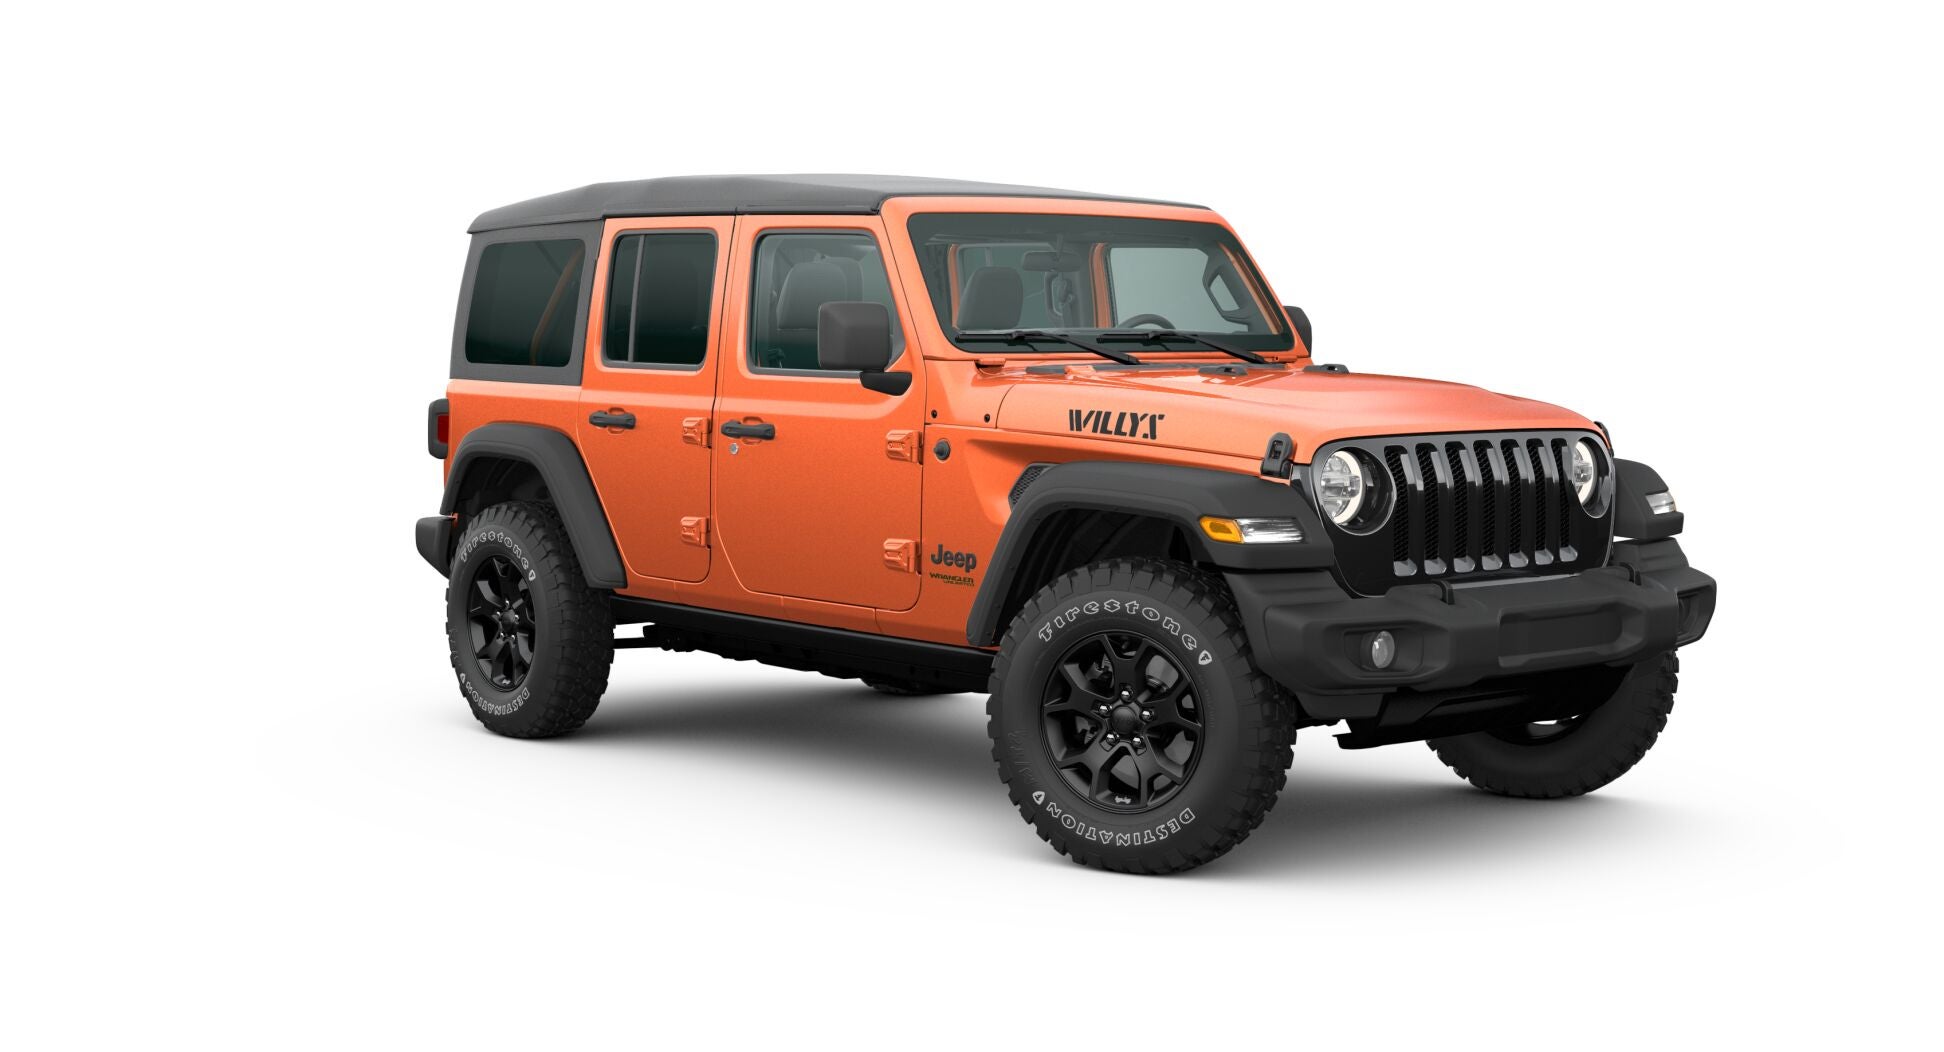 2020 Jeep Wrangler Trim Options Explained: Rubicon, Unlimited, Sahara